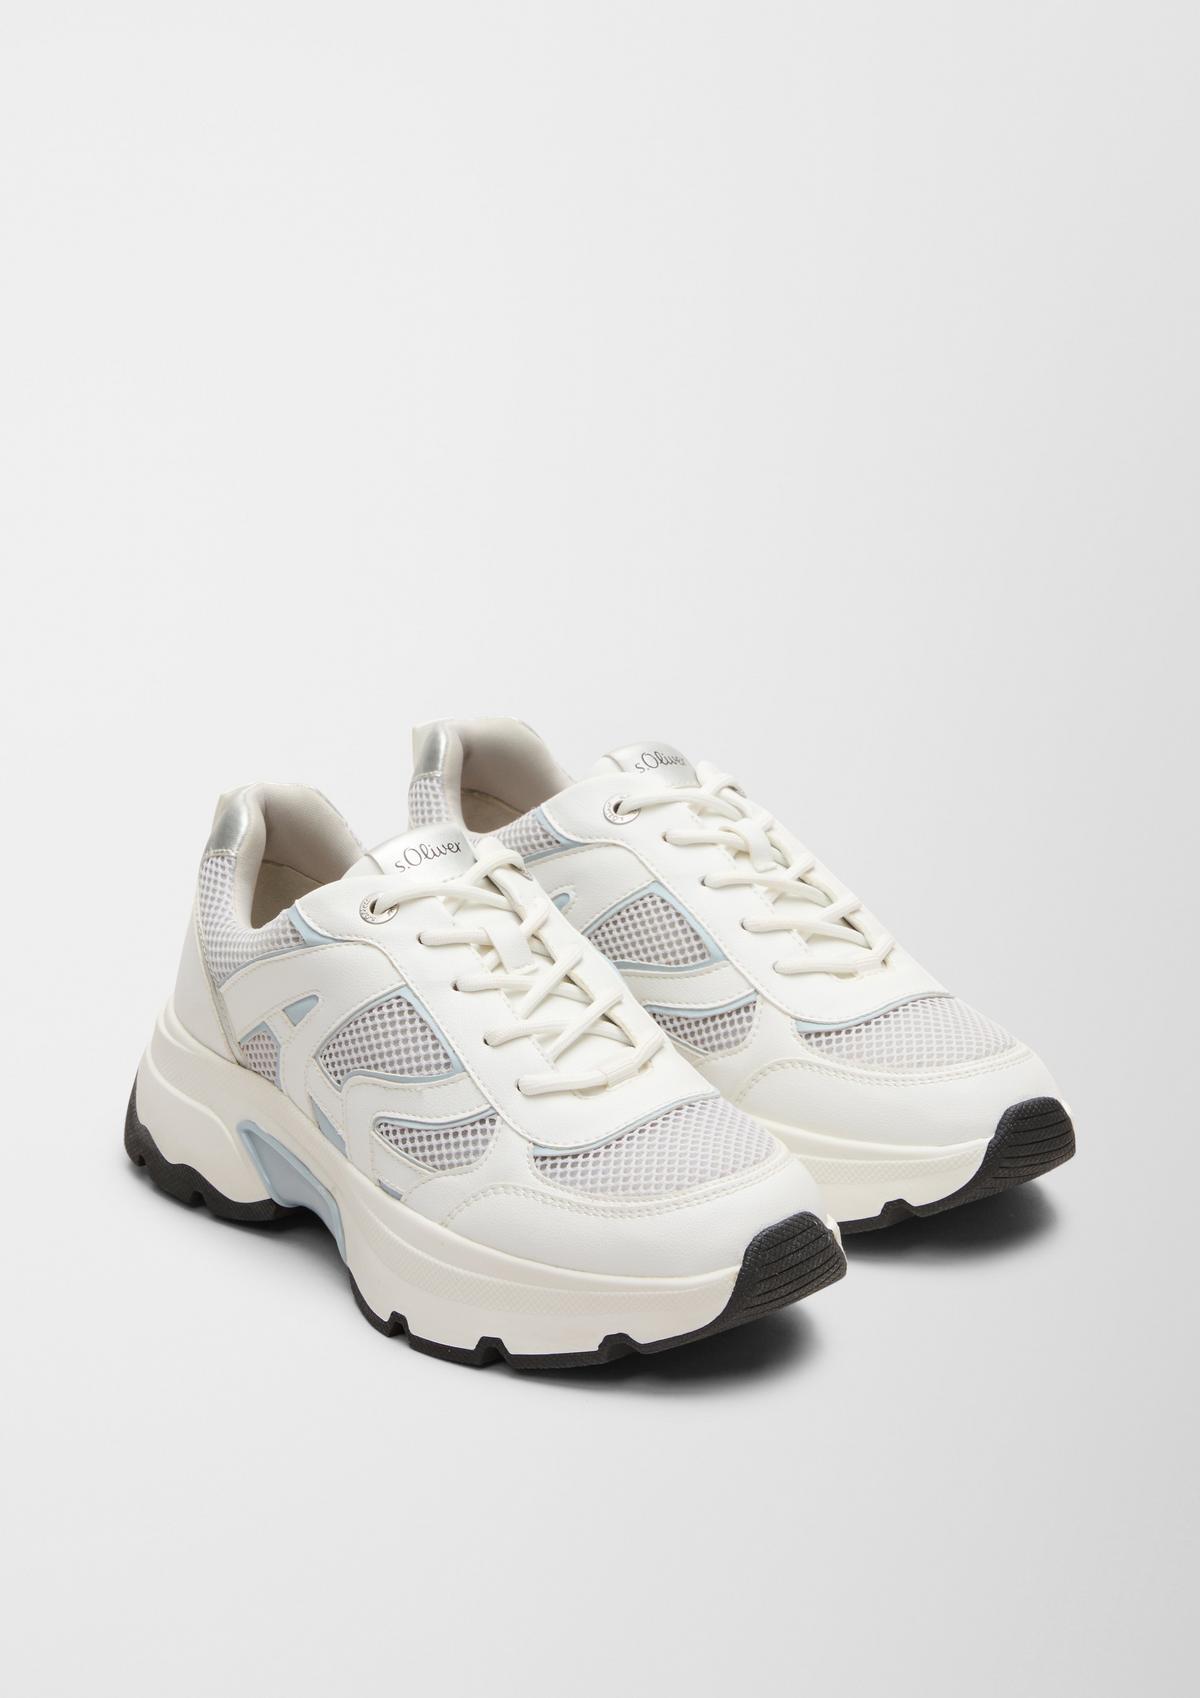 Vegane Sneaker Materialmix - im weiß